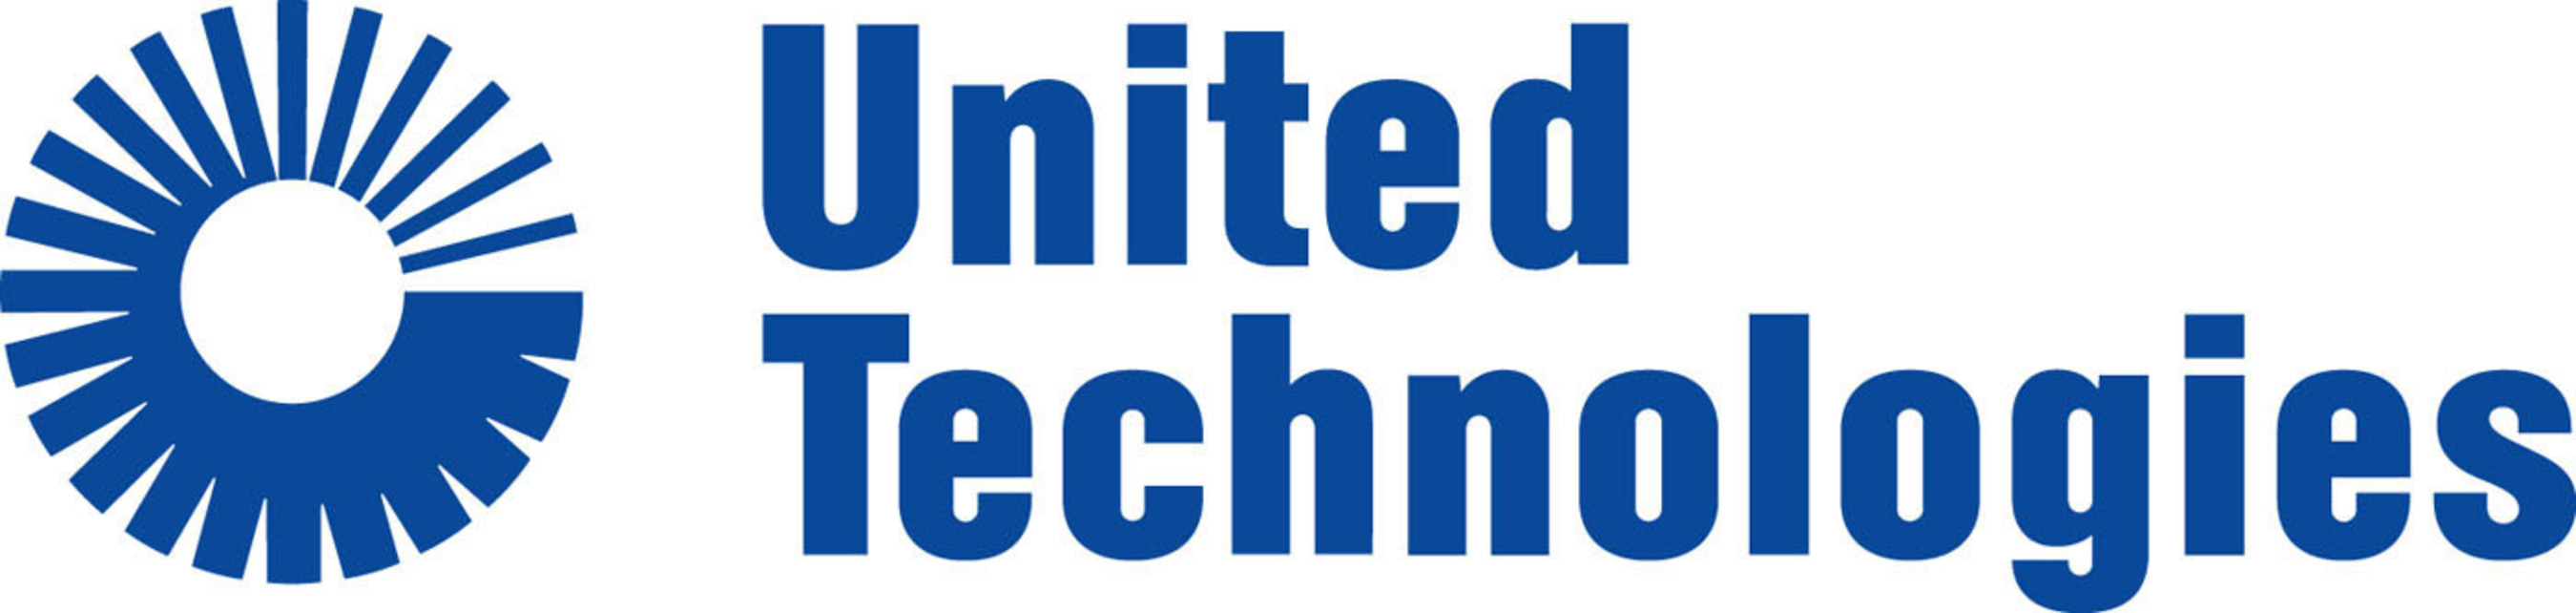 United Technologies Corp. (PRNewsFoto/United Technologies Corp.) (PRNewsFoto/UNITED TECHNOLOGIES CORP.)